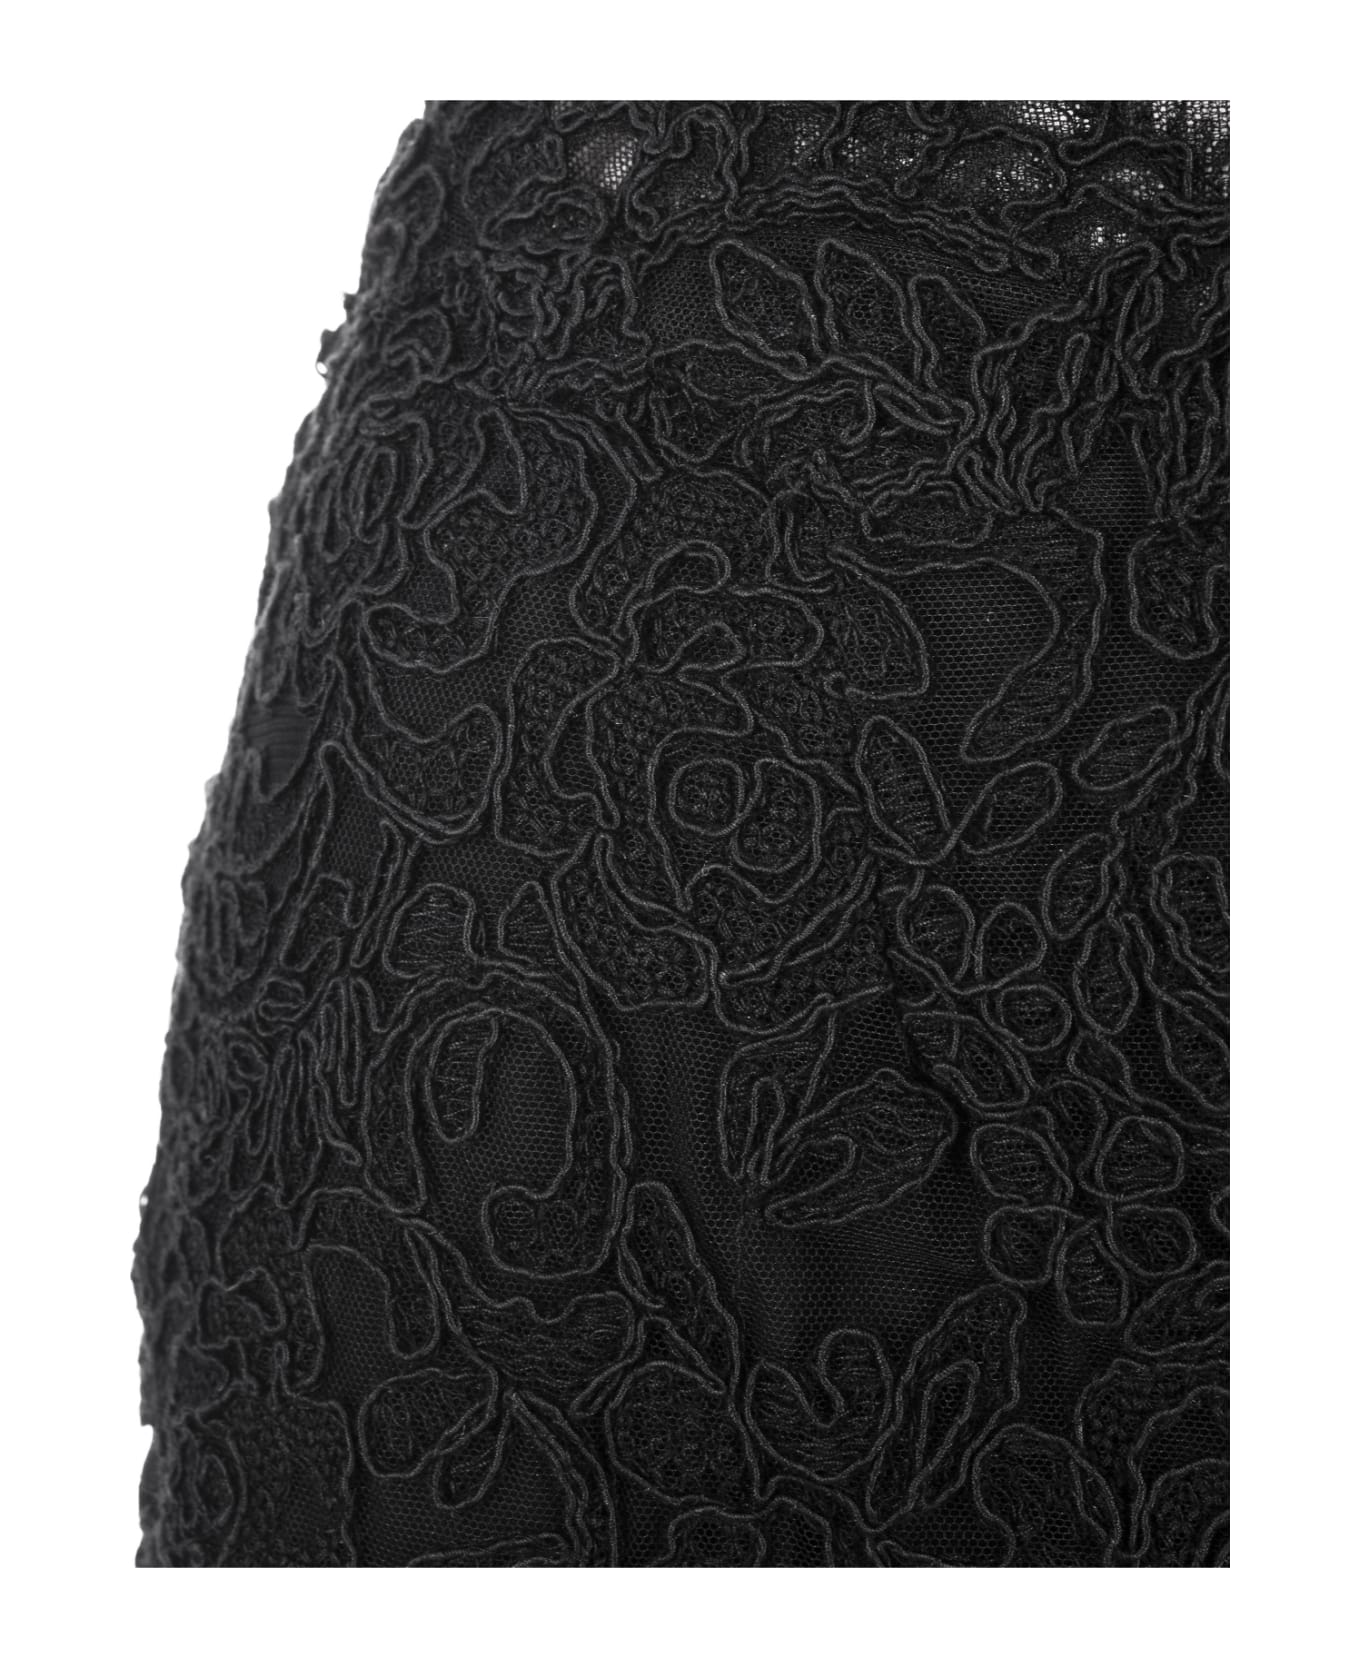 Ermanno Scervino Black Lace Longuette Skirt - Black